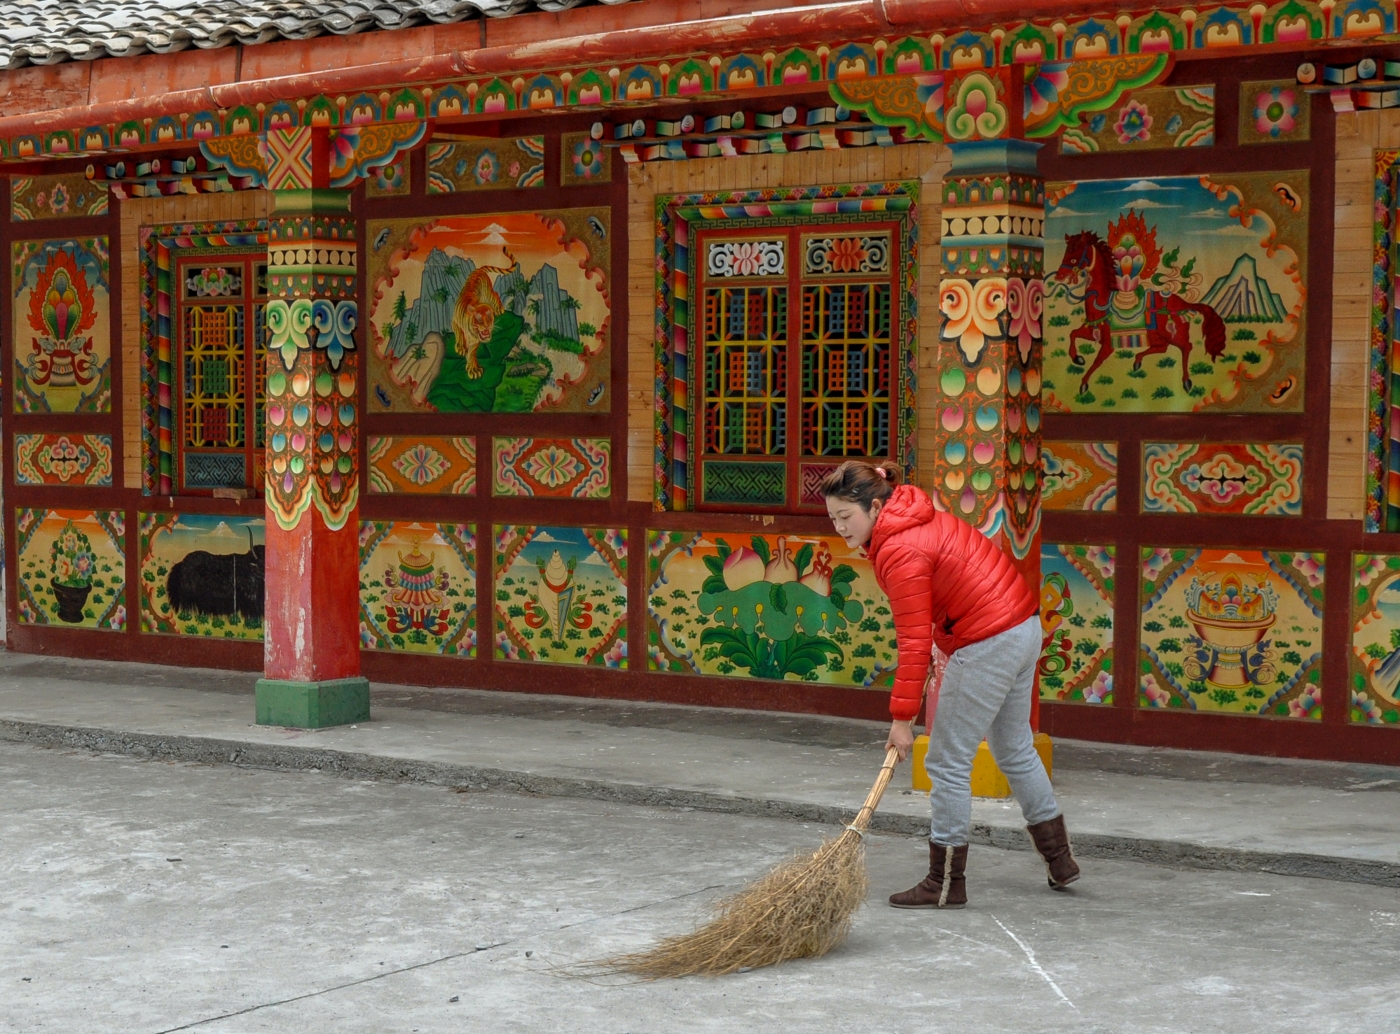 Sweeping - Tibetan border of China by Susan Case